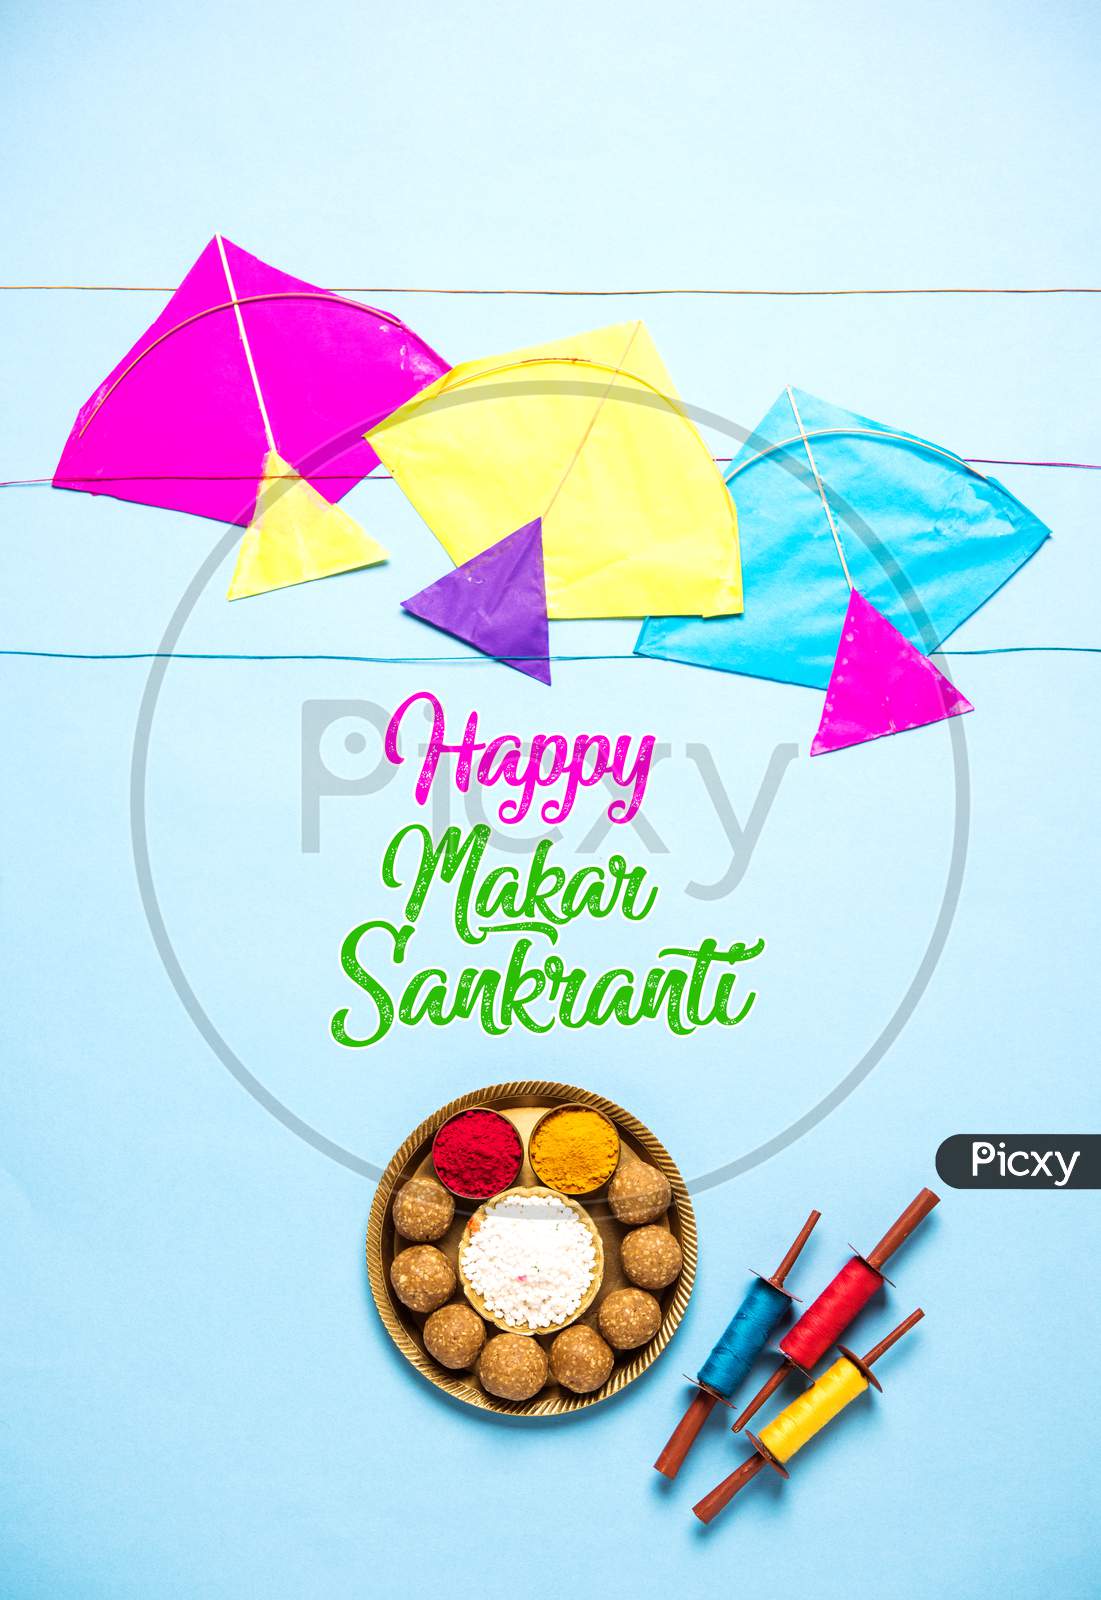 Happy Makar Sankranti - tilgul, patang or kite with haldi kumkum